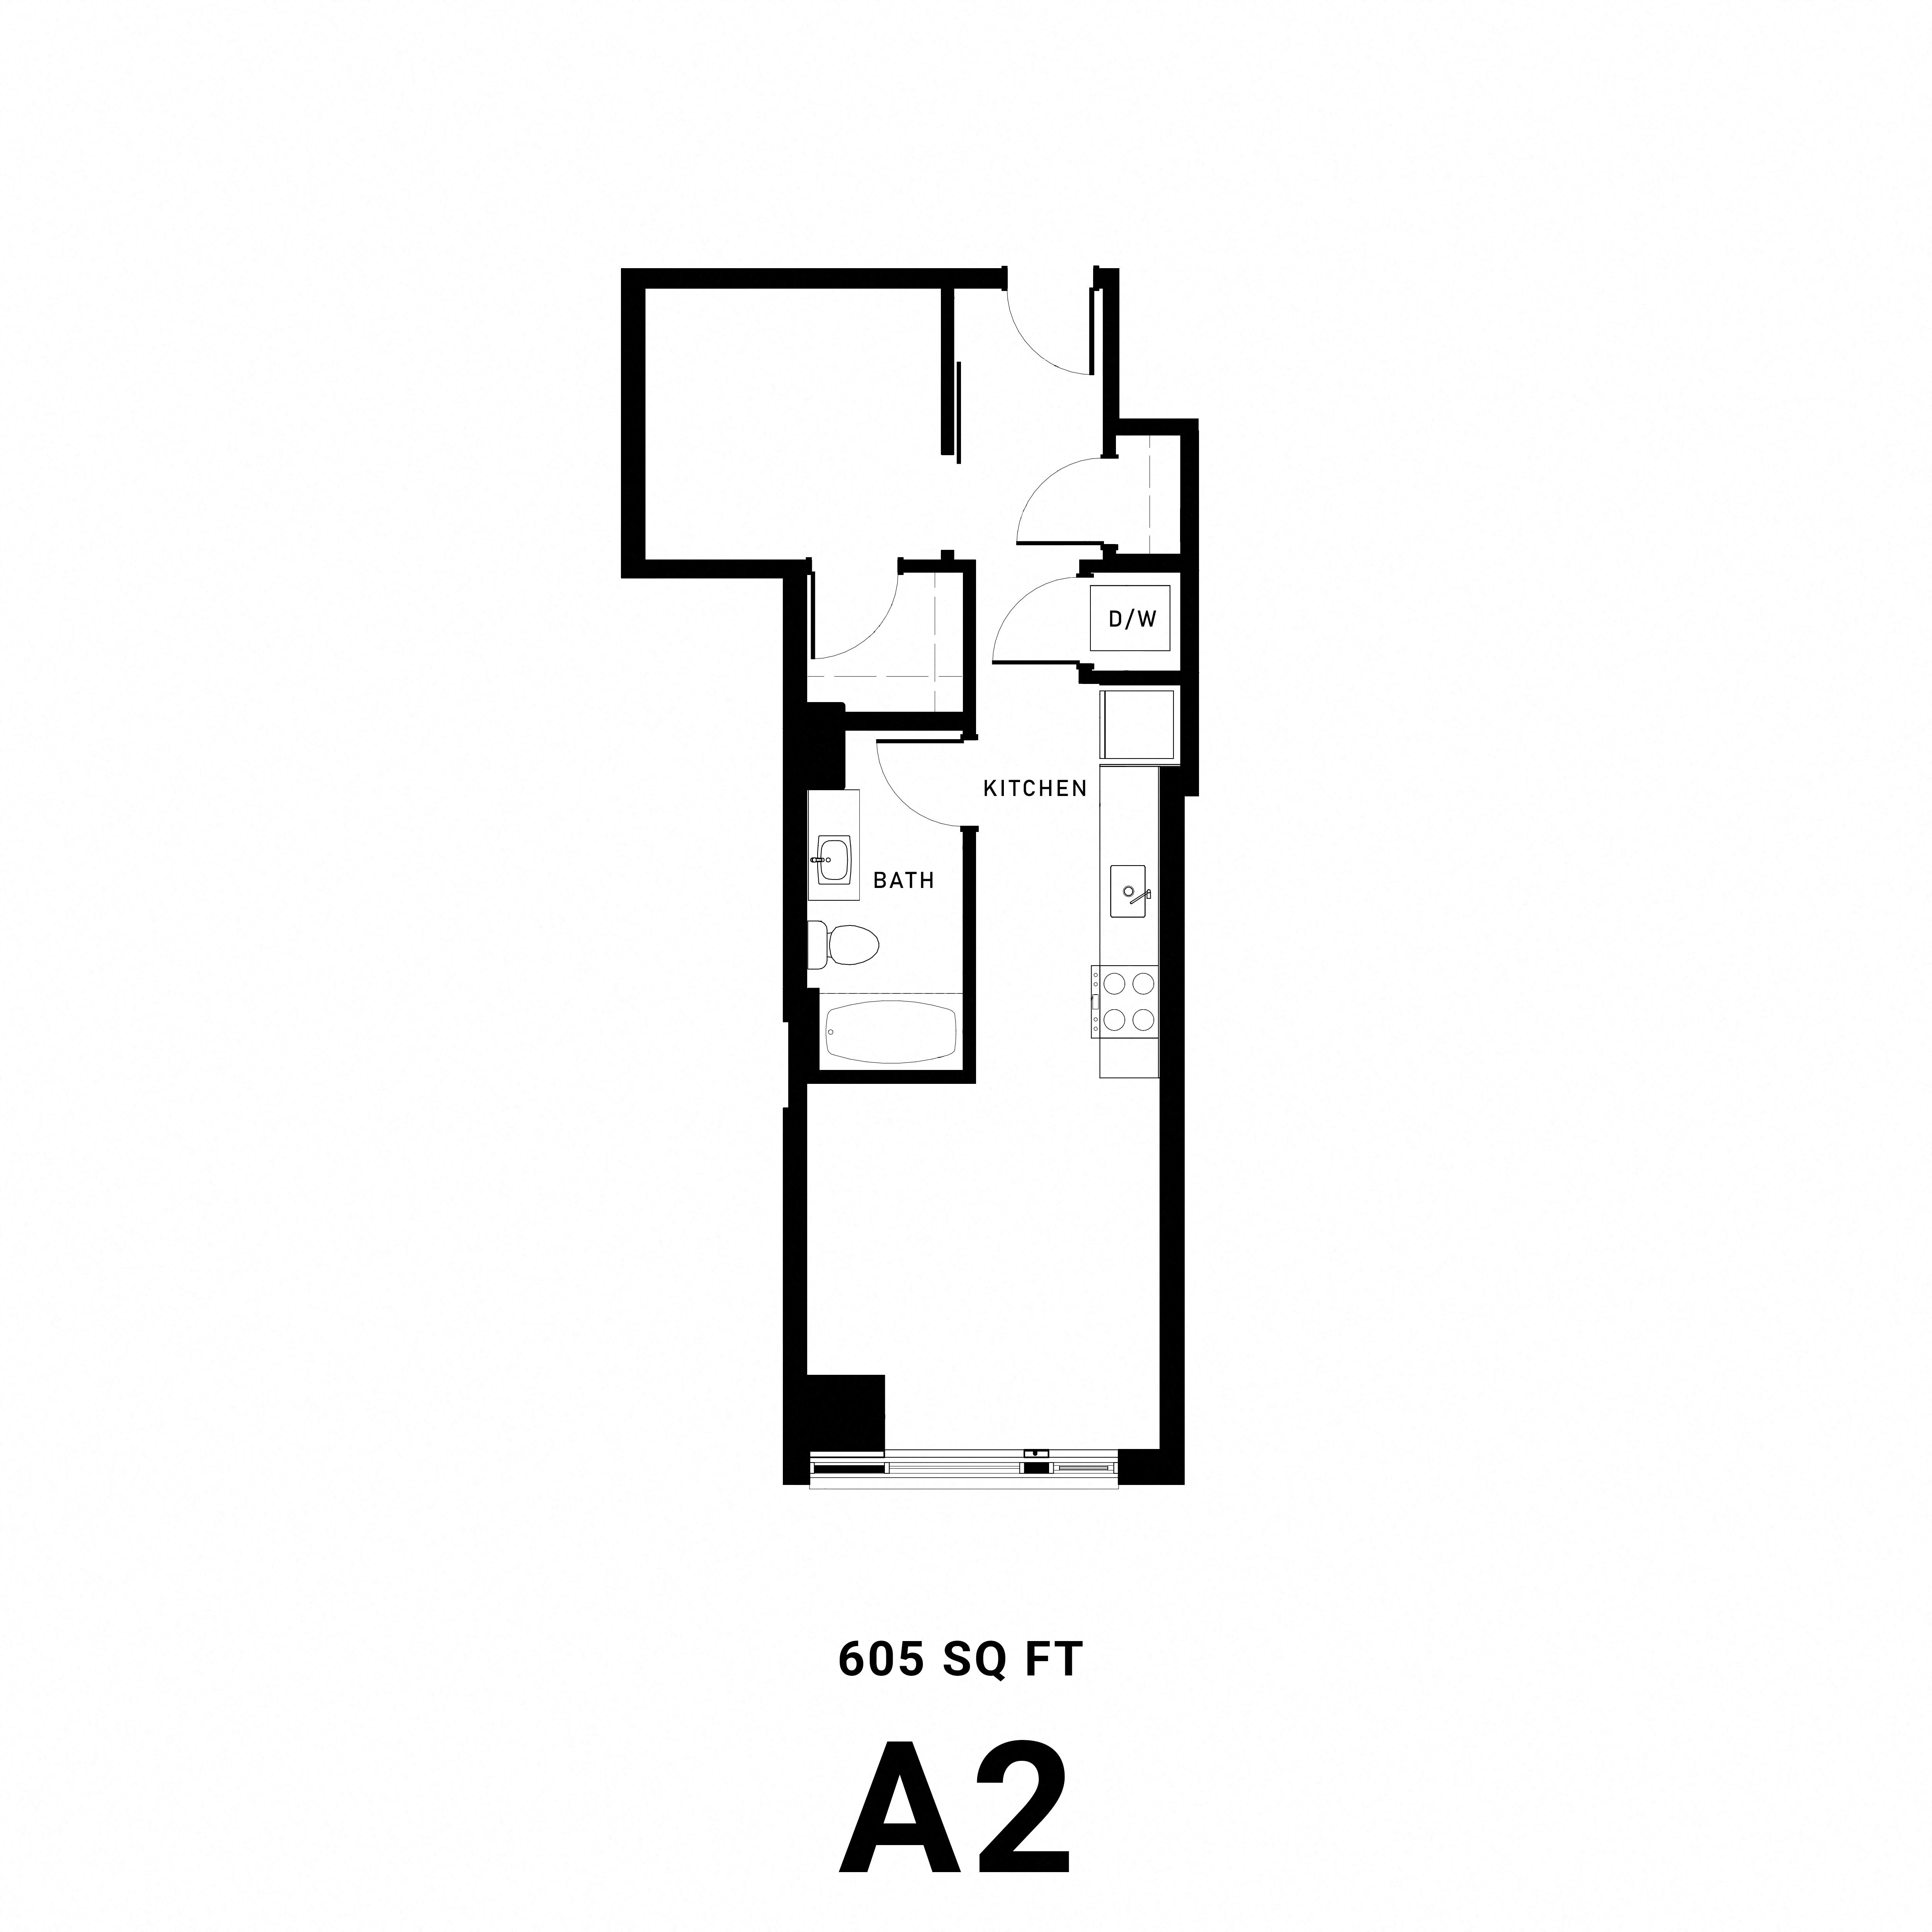 Floorplan A2